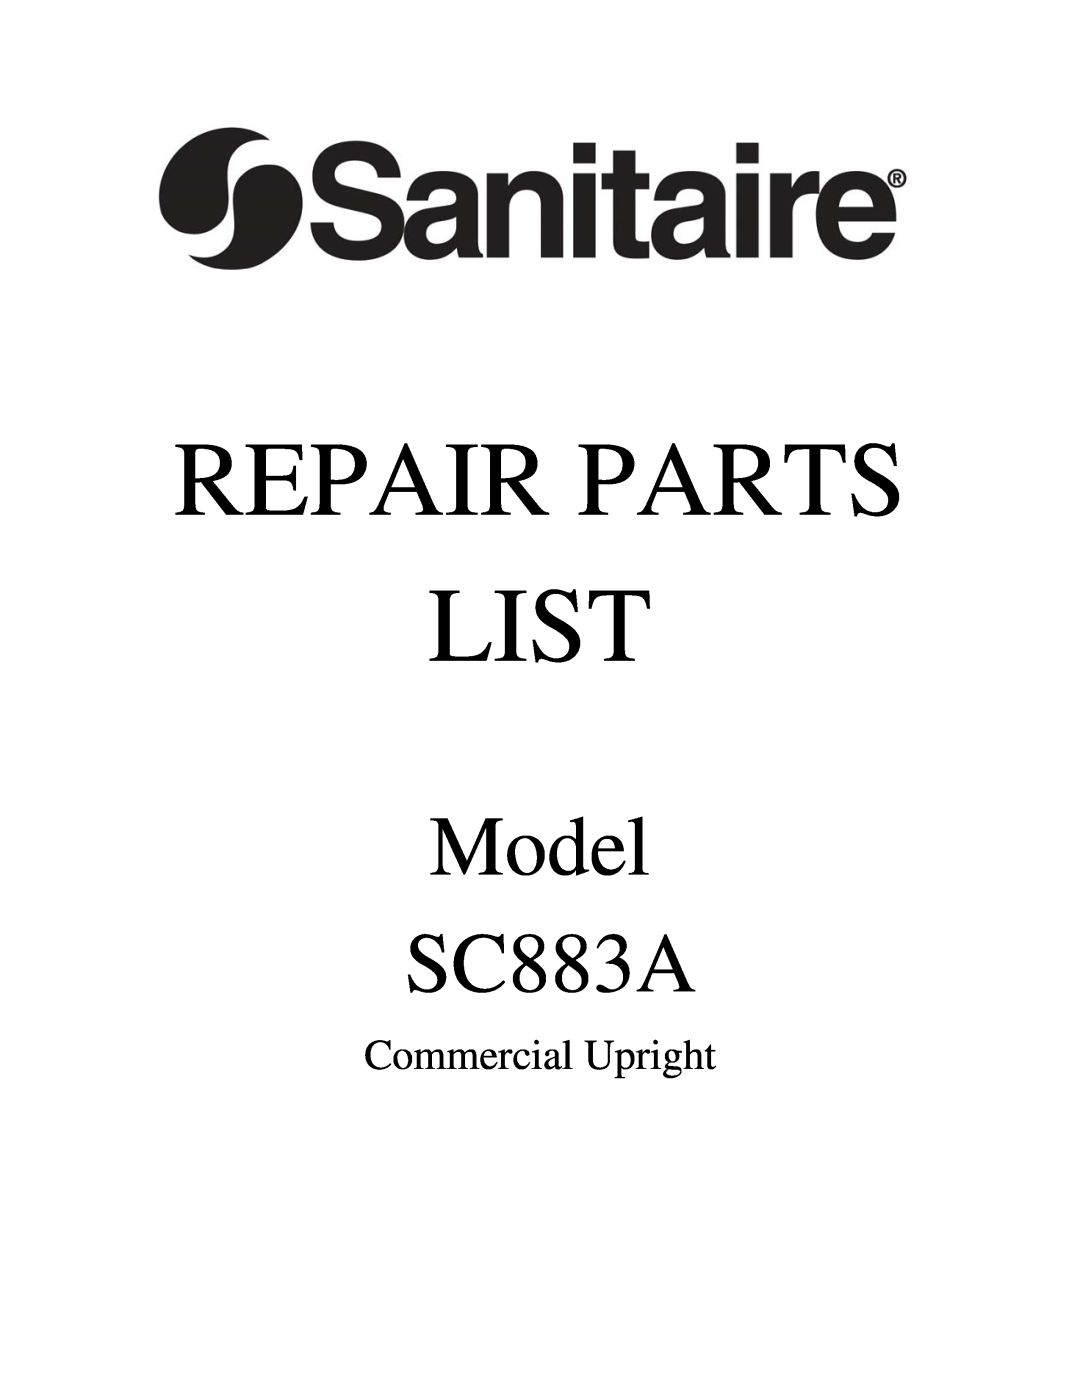 Sanitaire manual Repair Parts List, Model SC883A, Commercial Upright 